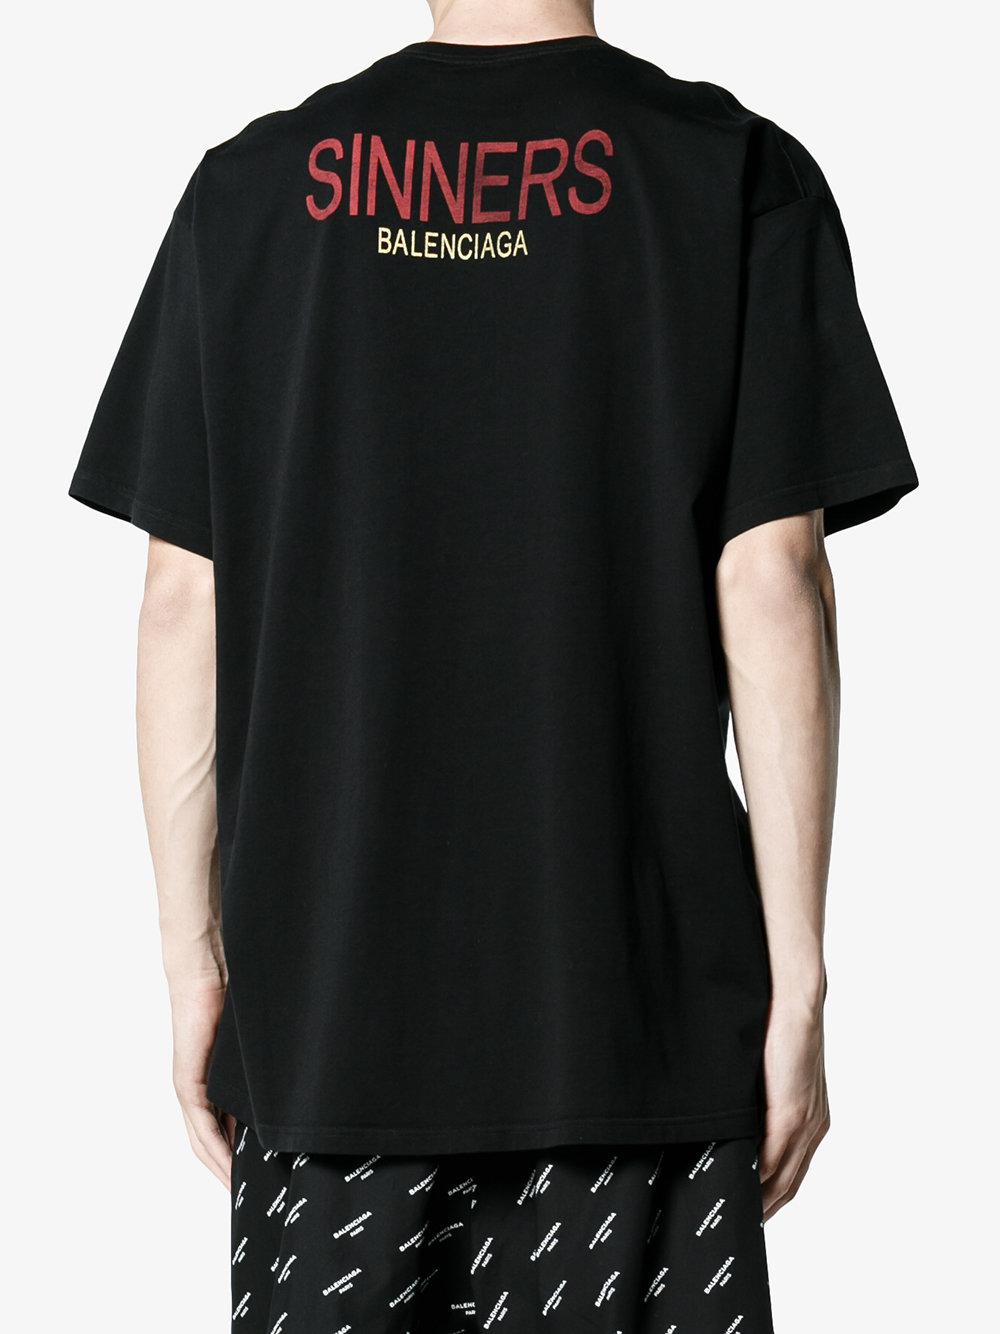 Balenciaga Cotton Sinners T-shirt in 